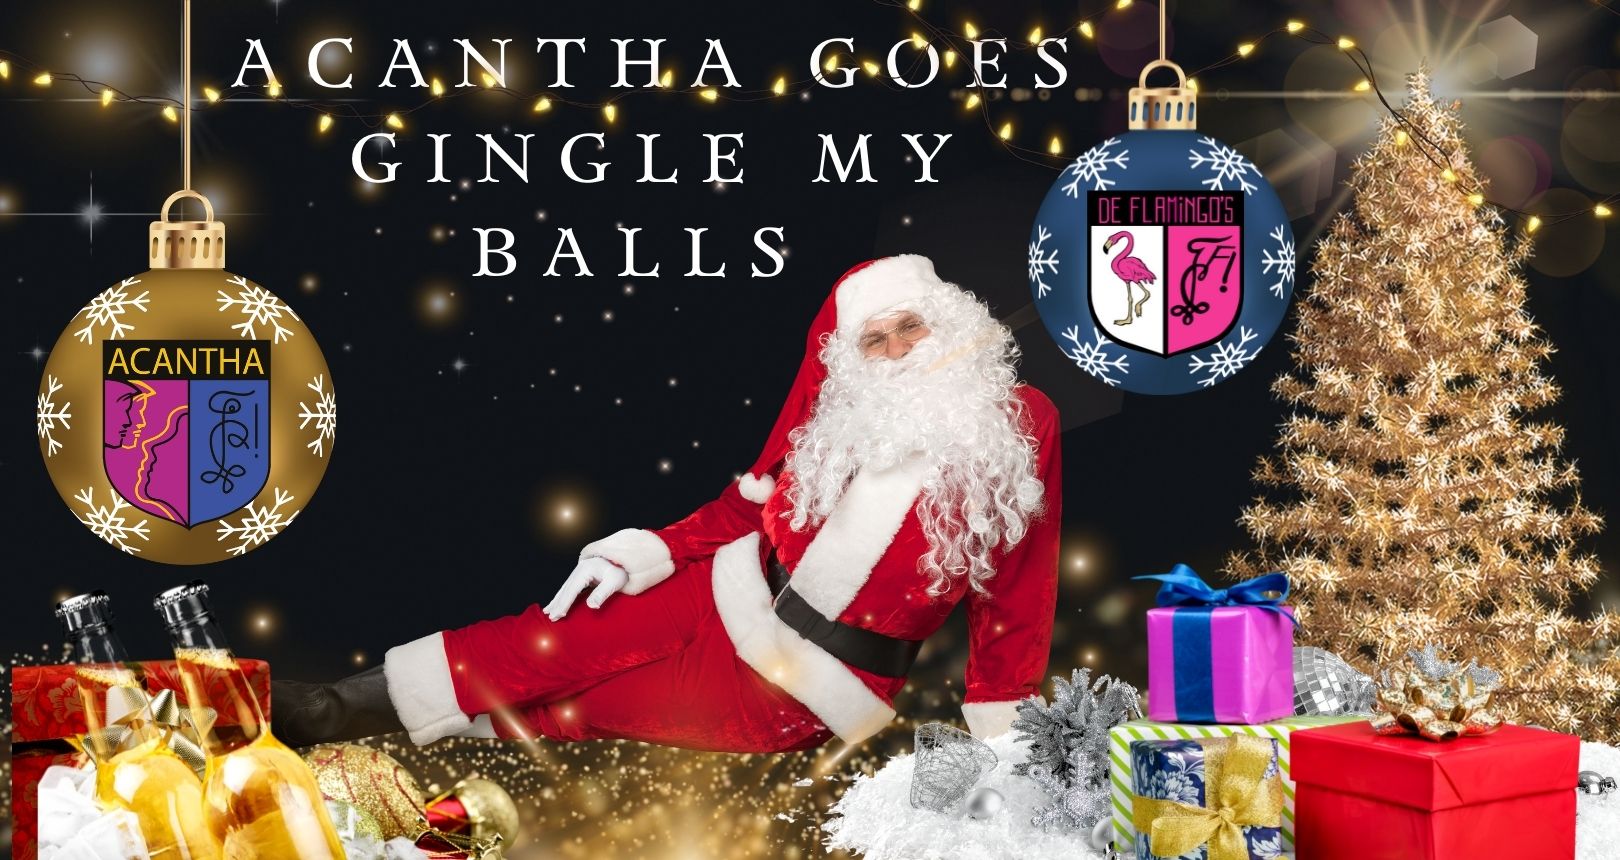 Acantha goes gingle my balls